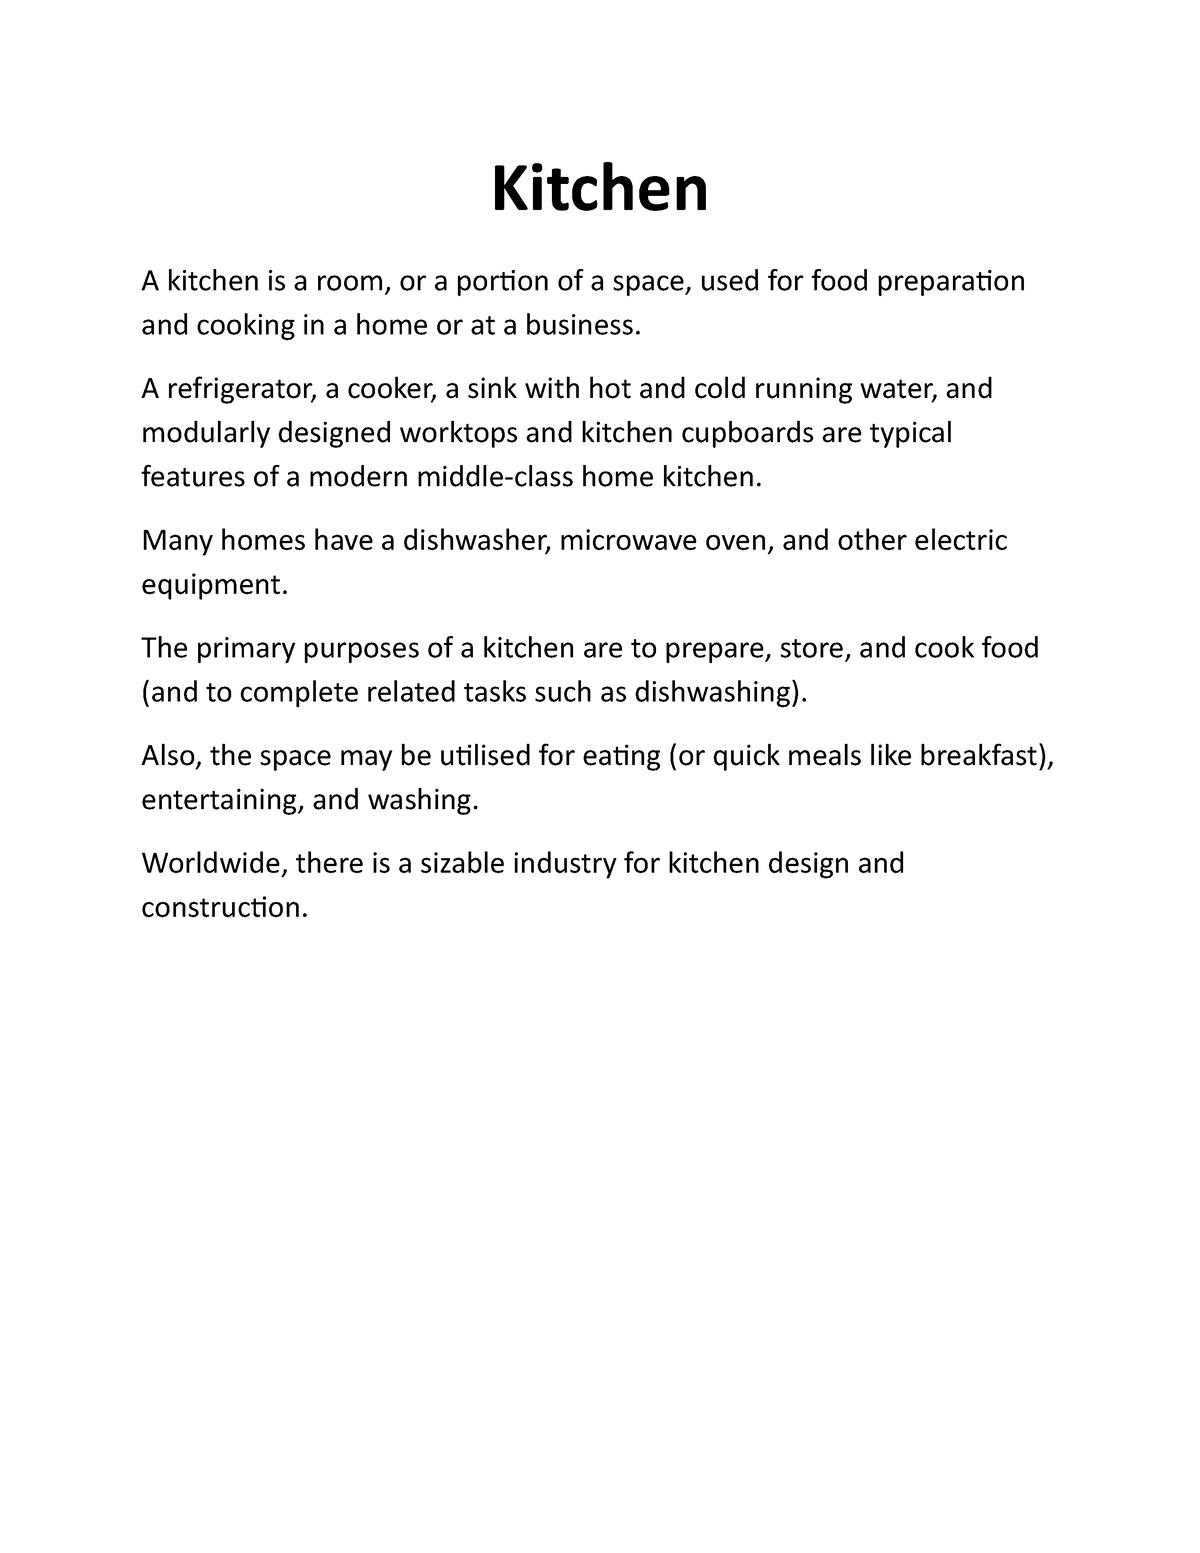 essay on kitchen cabinets